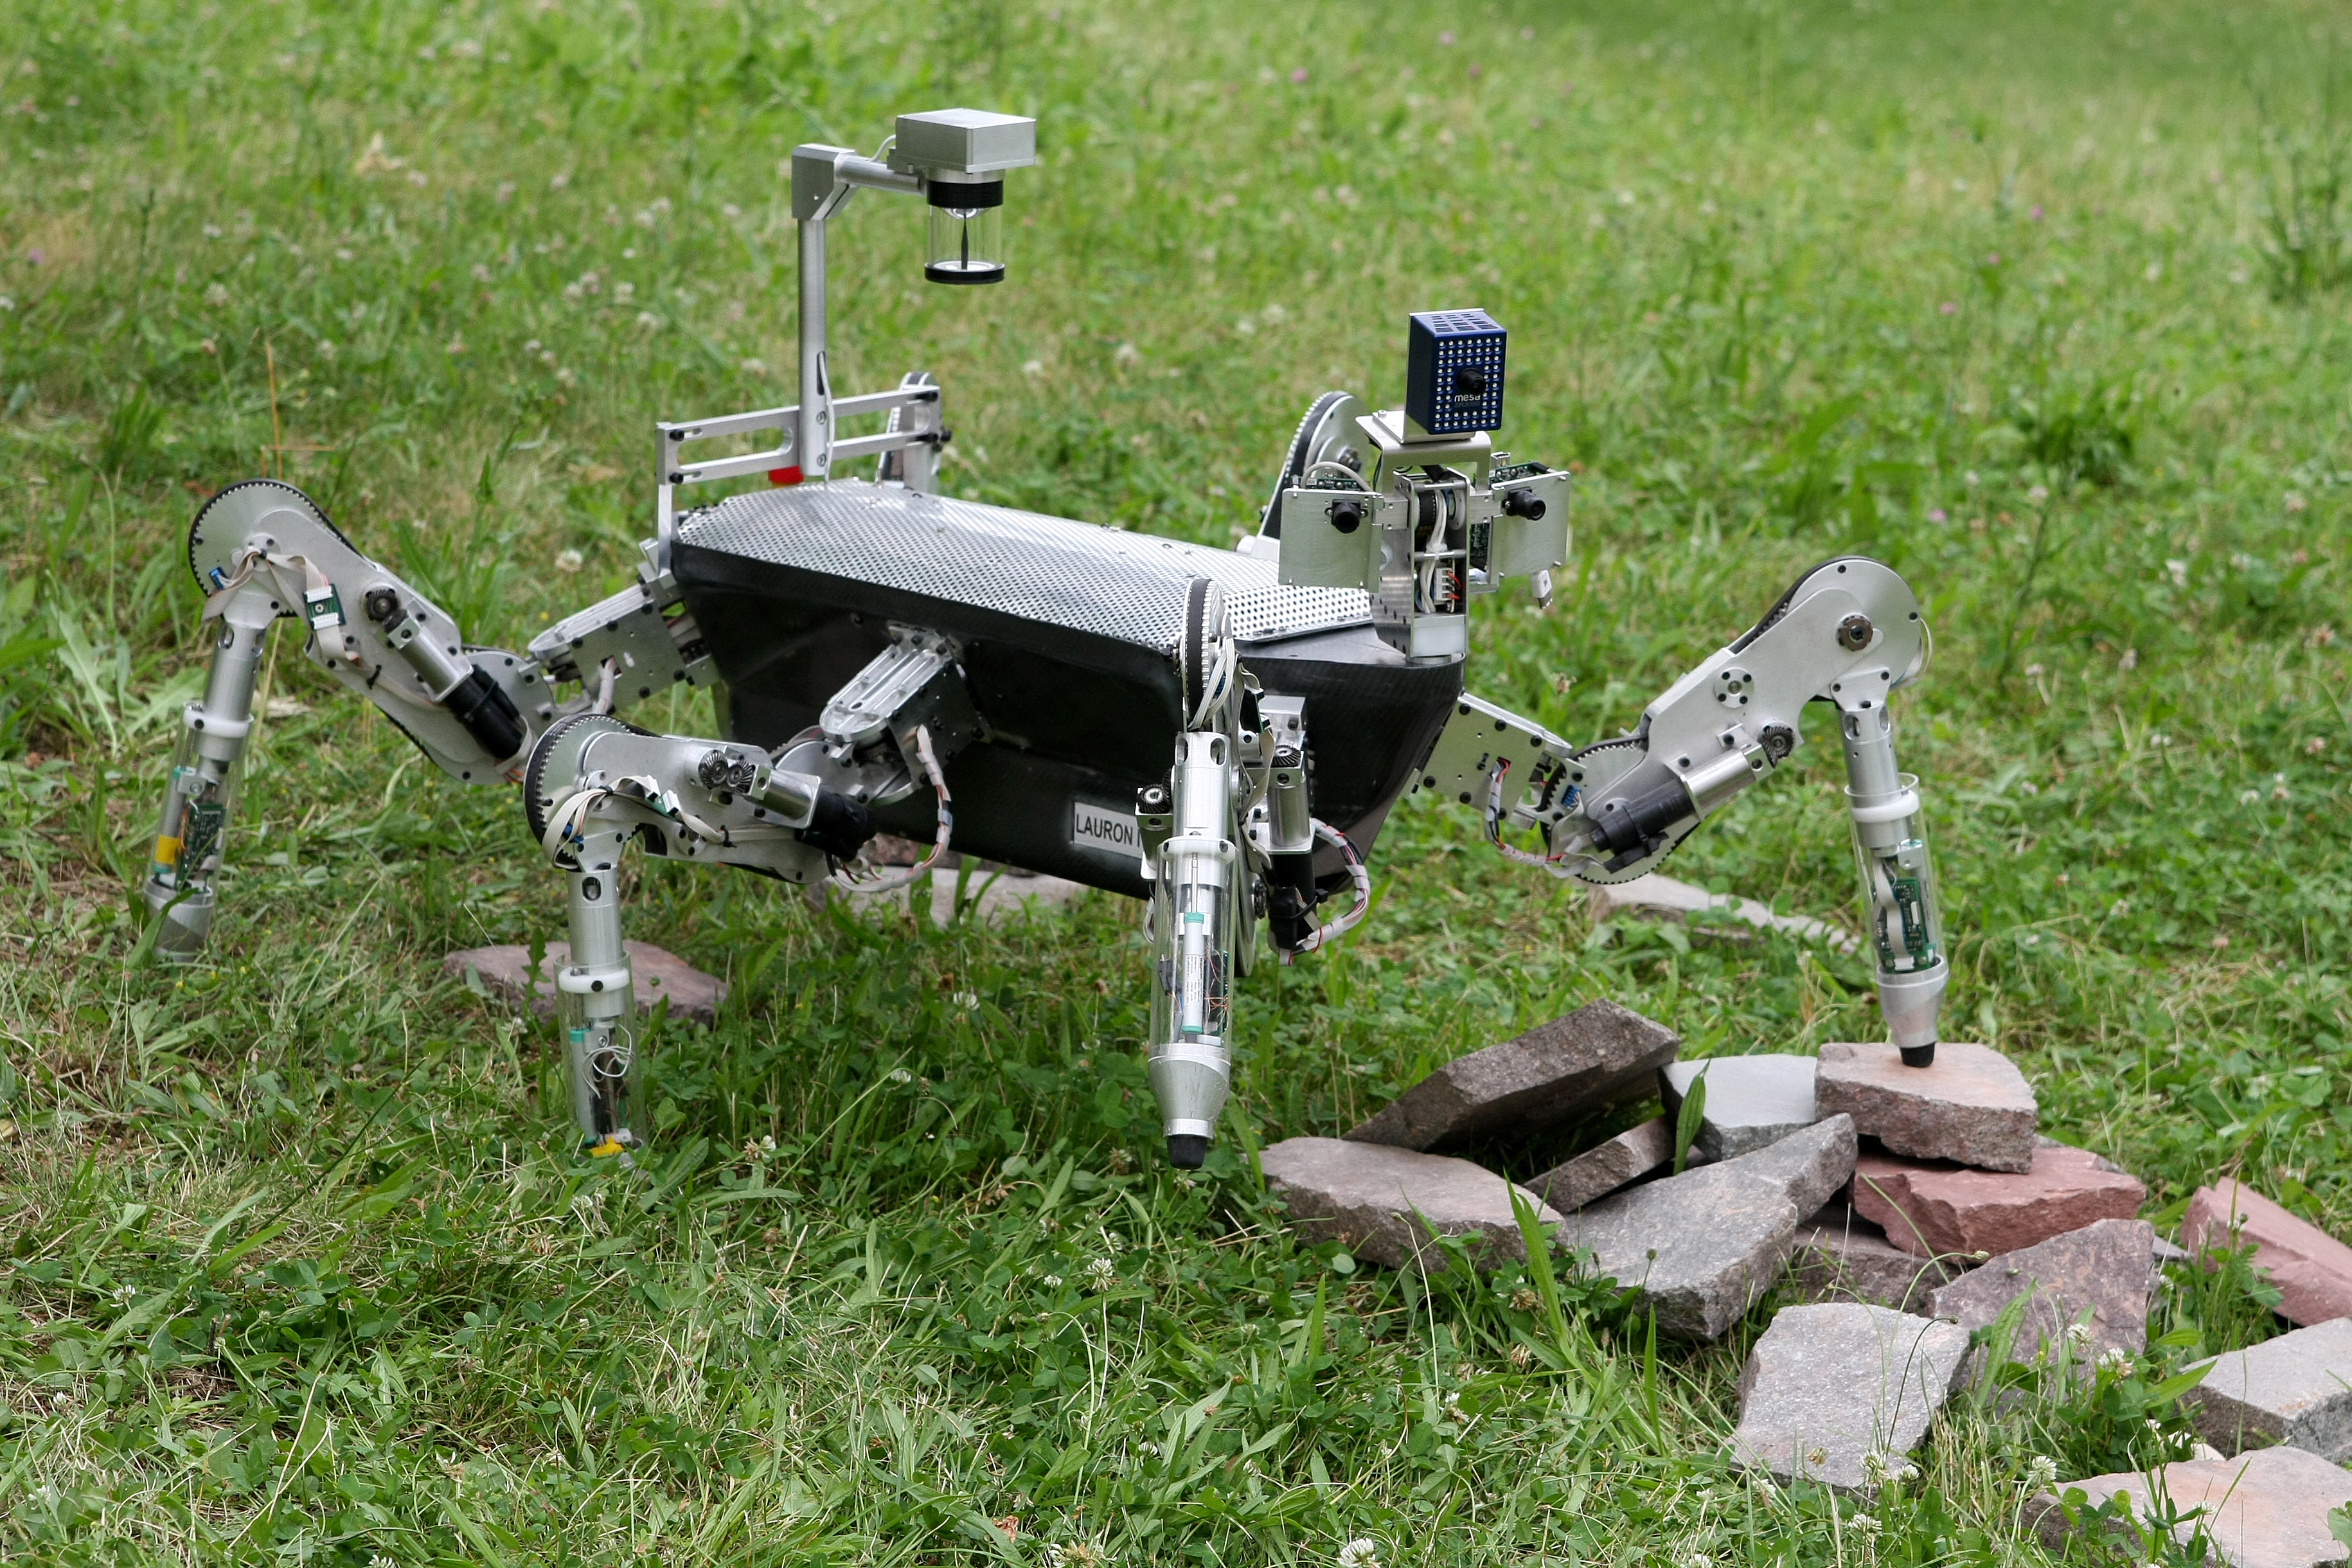 six-legged robot